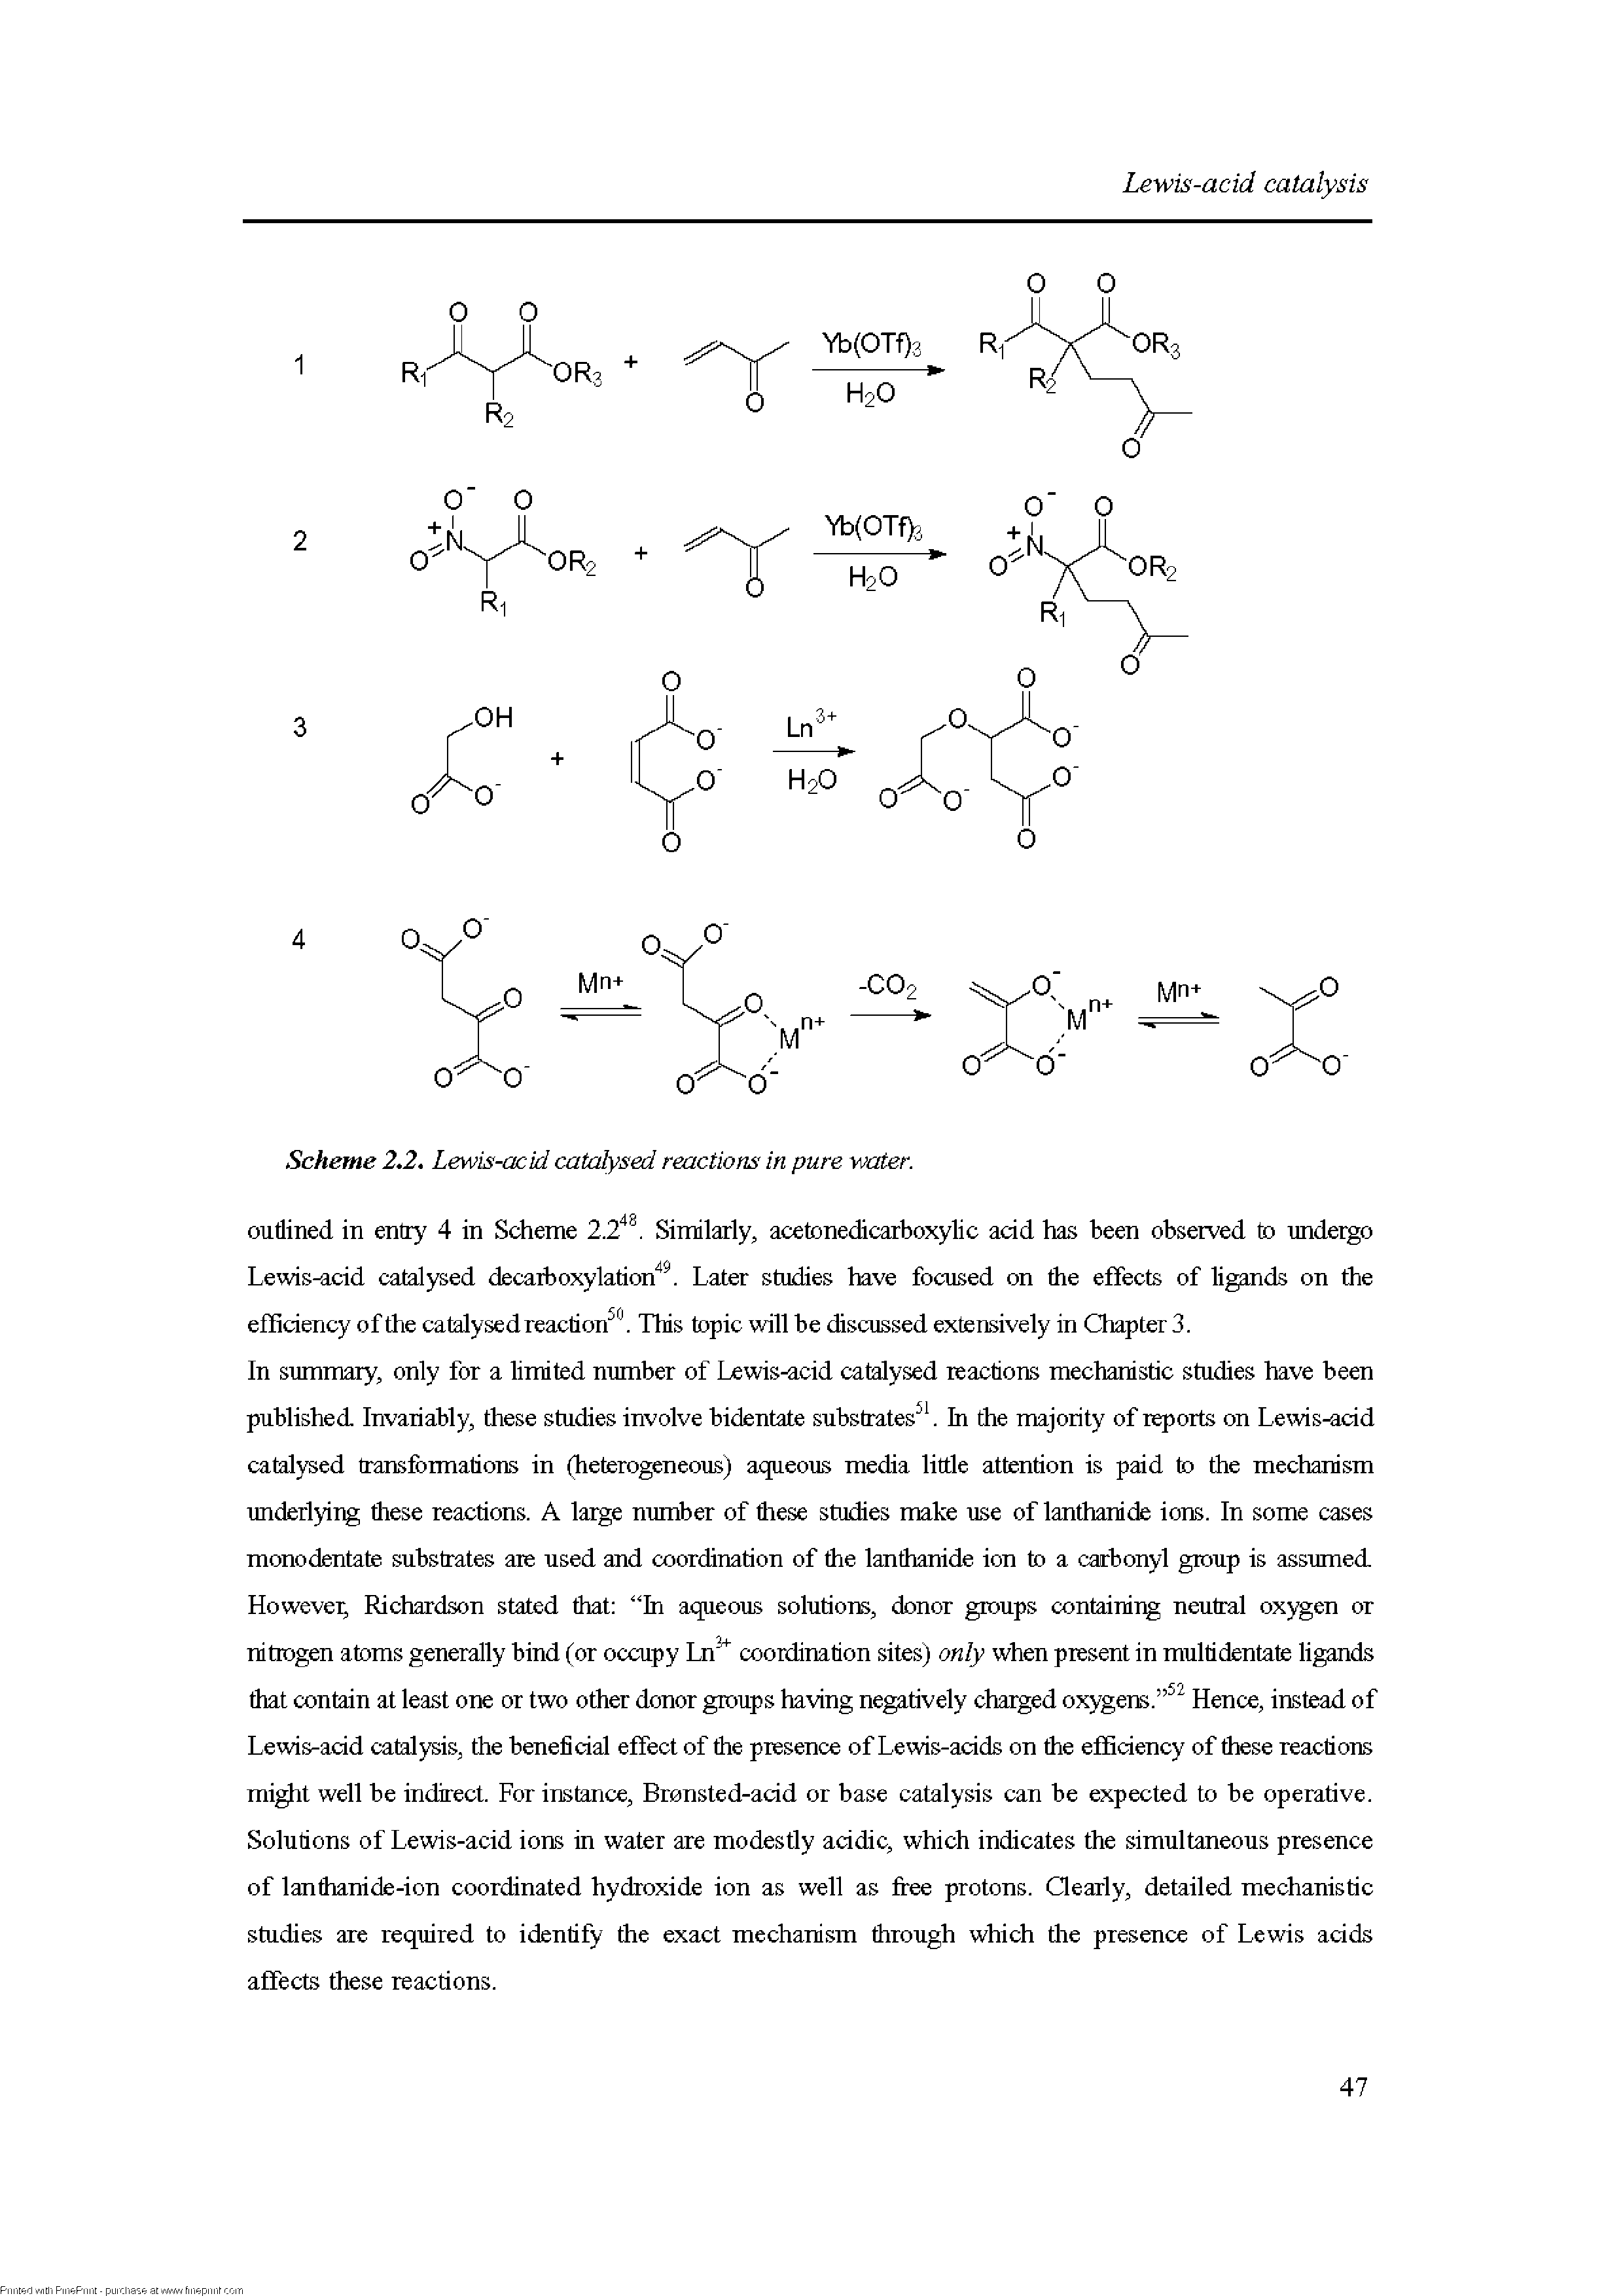 Scheme 2.2. Lewis-acid catalysed reactions in pure water.